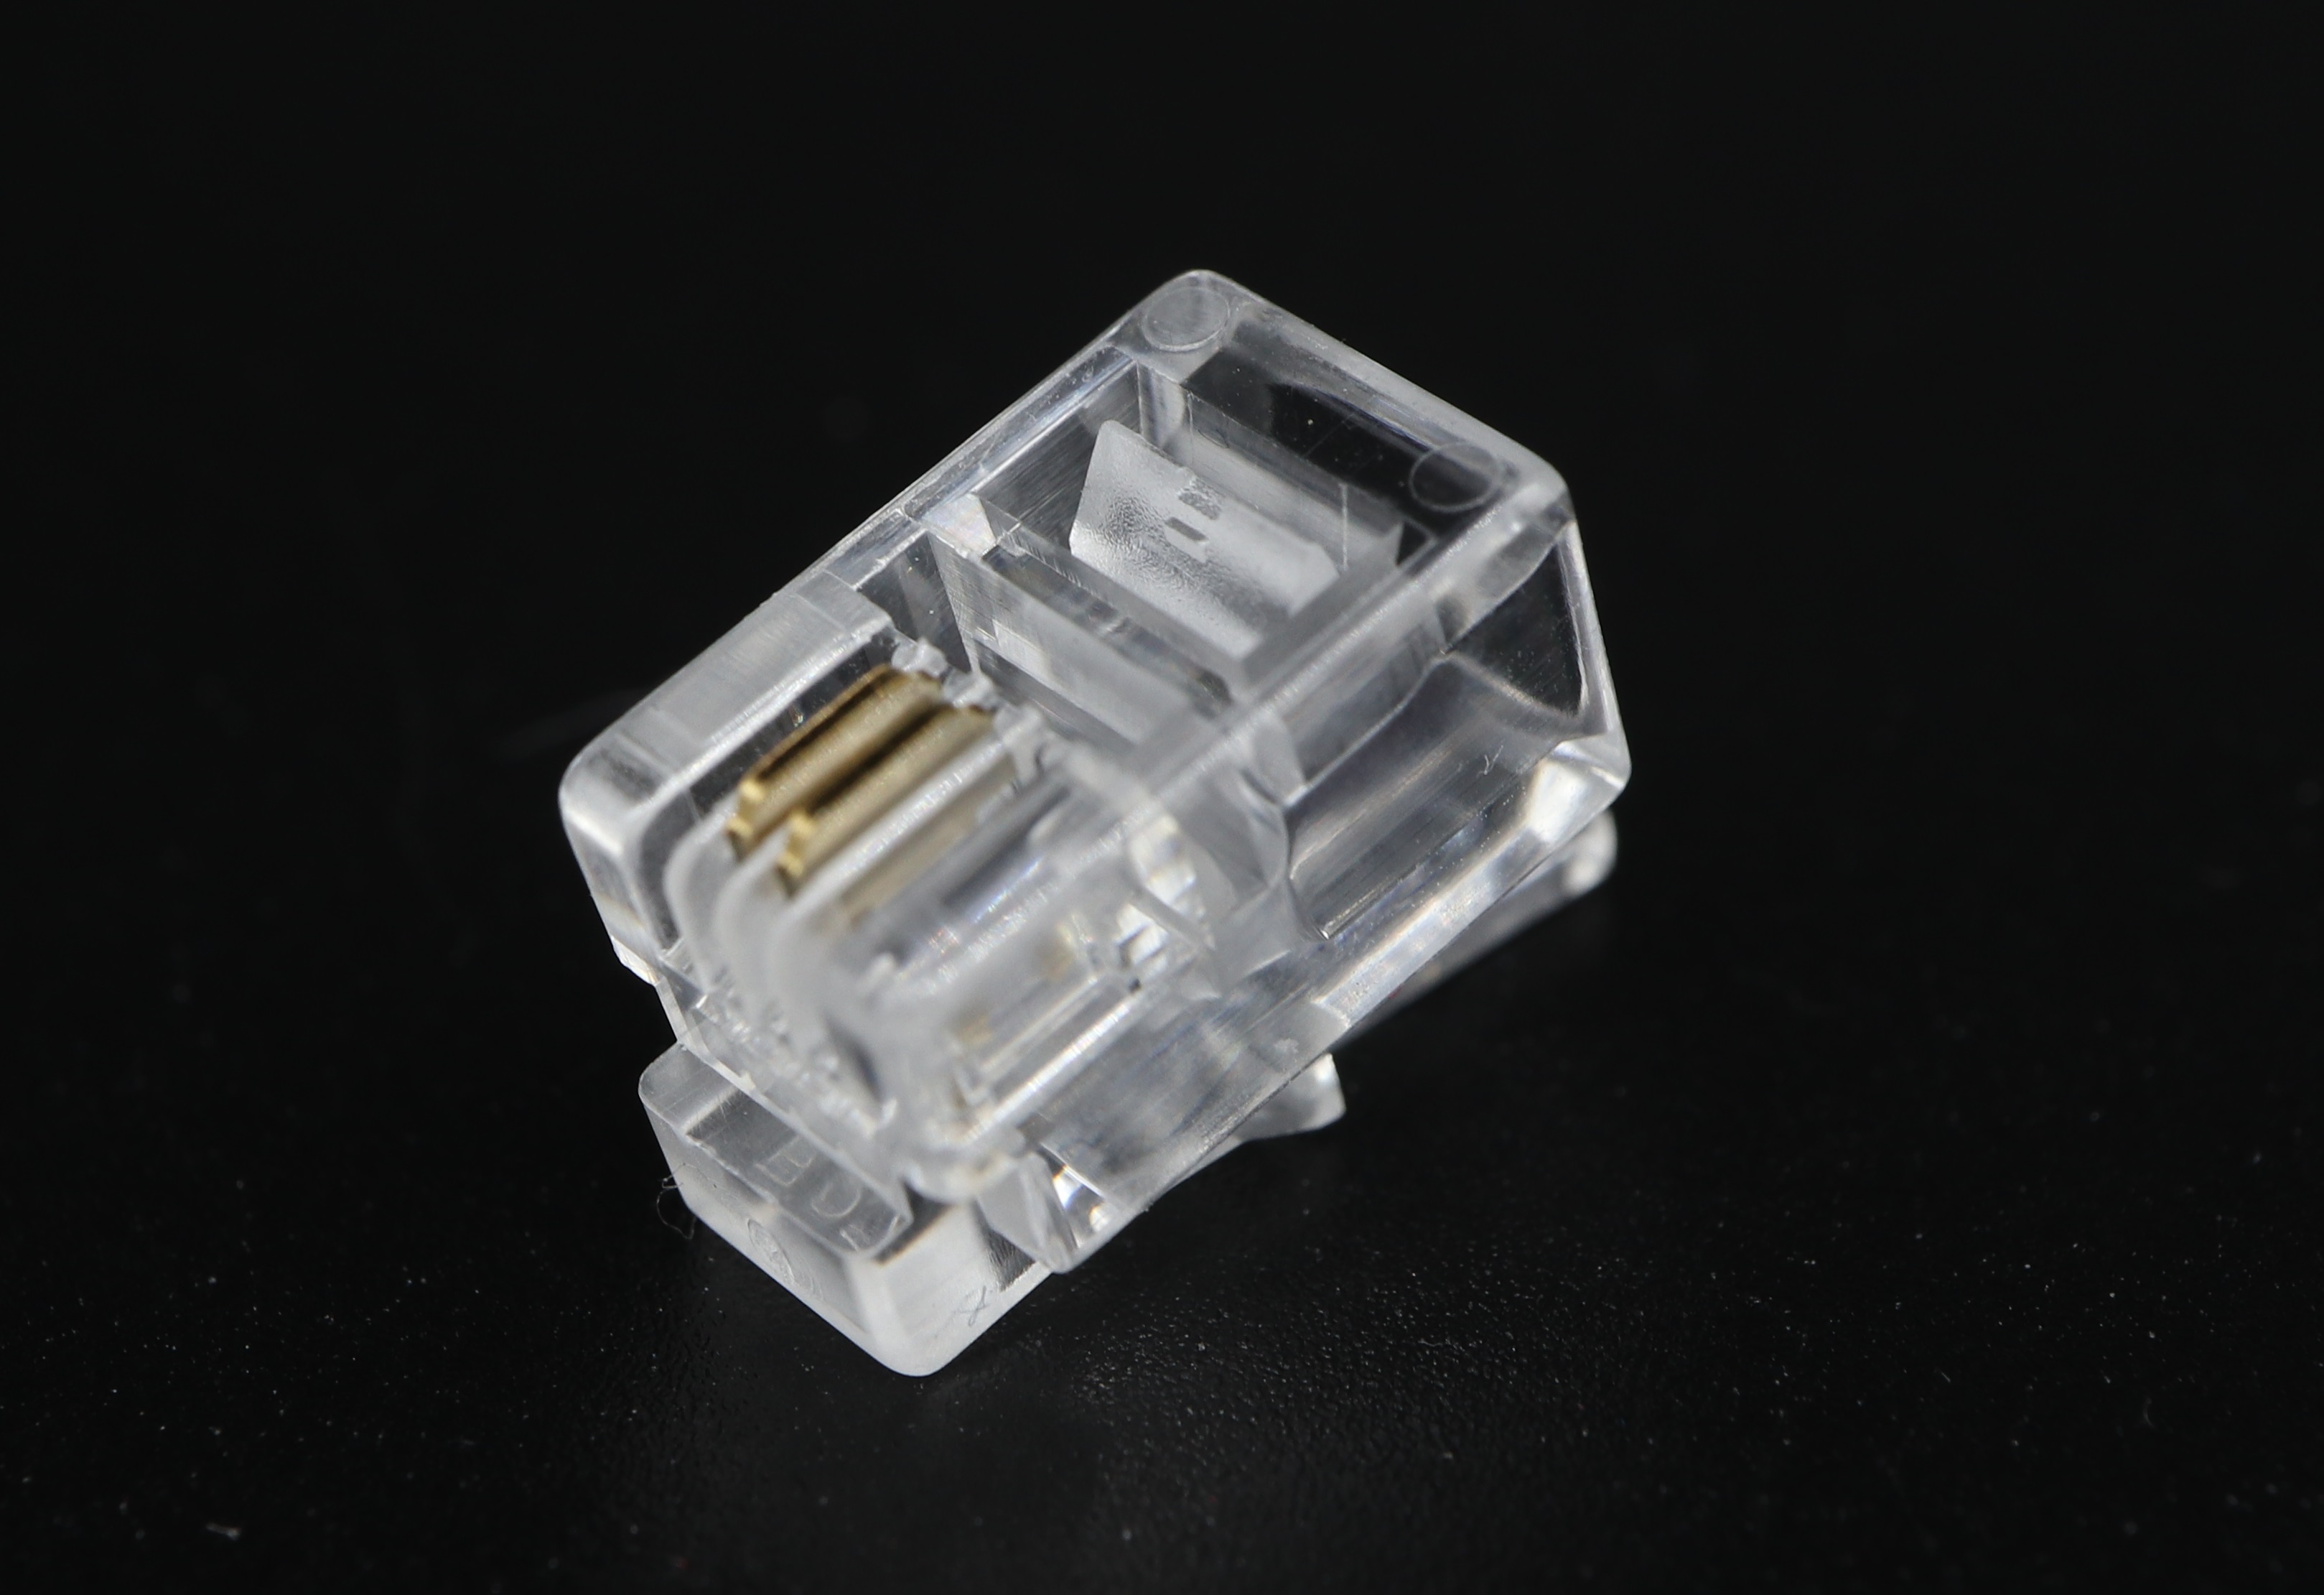 P4-003 - Modular plugs